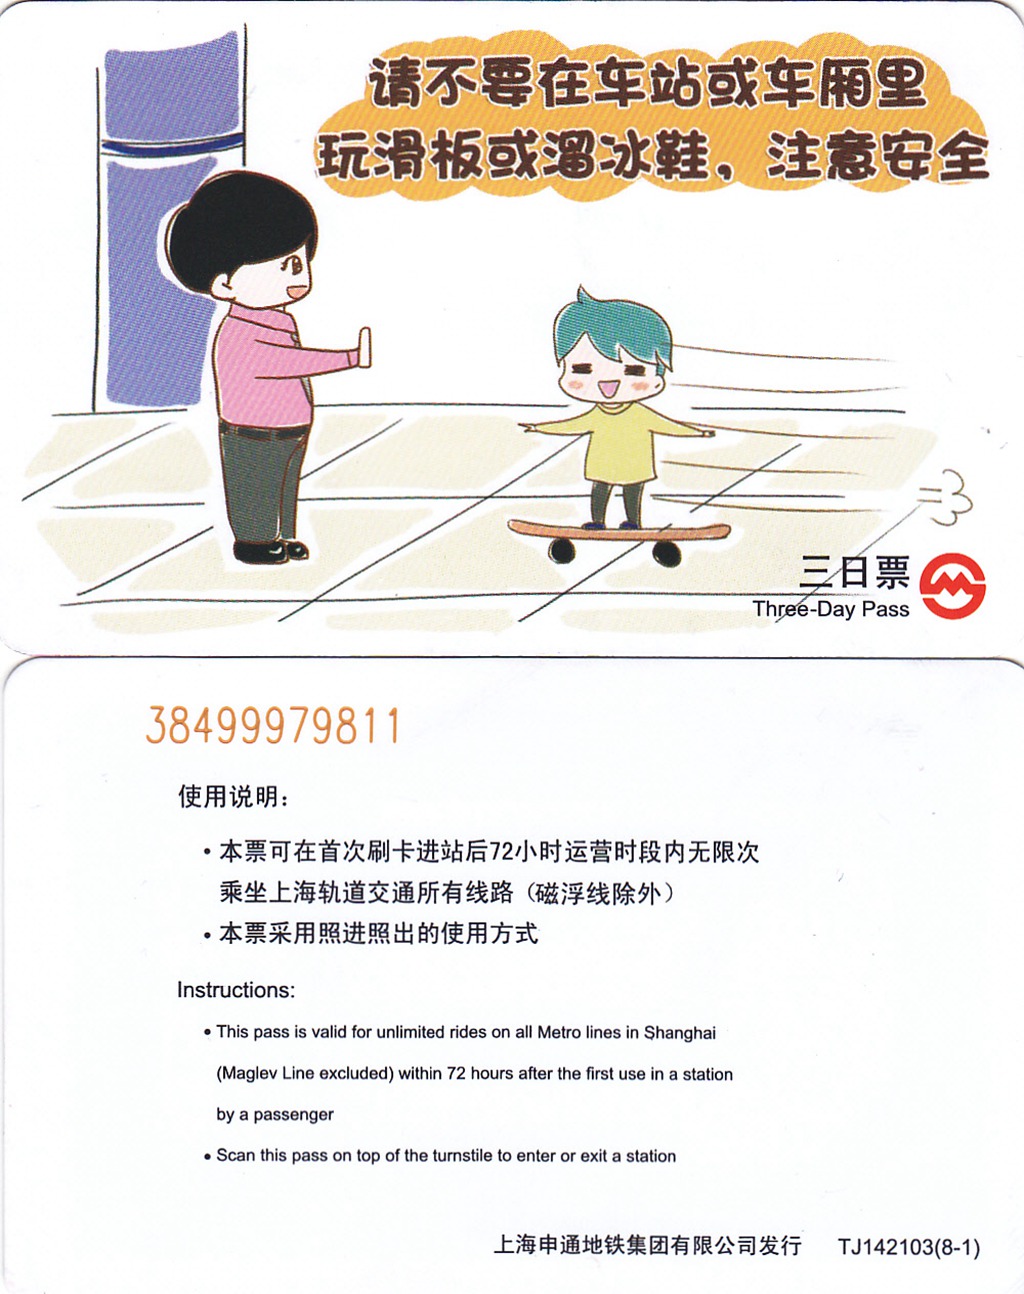 T5011, Shanghai Metro Card (Subway Tube Ticket), Three Day, 2015 "Traffic Safety"